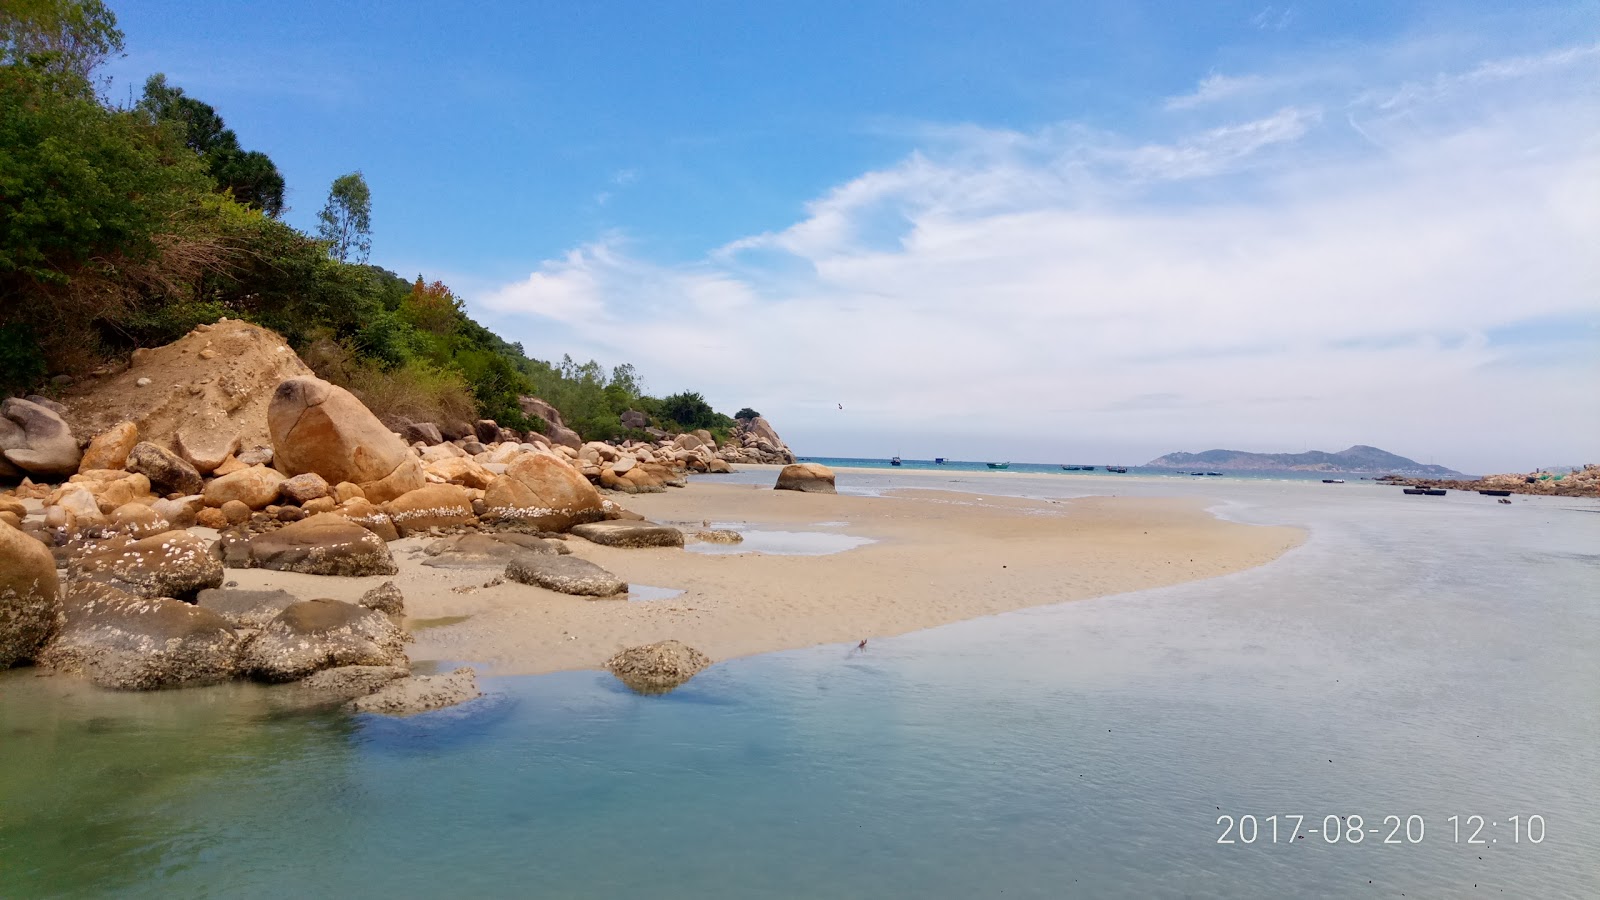 Zdjęcie Ba Bong Beach i jego piękne krajobrazy